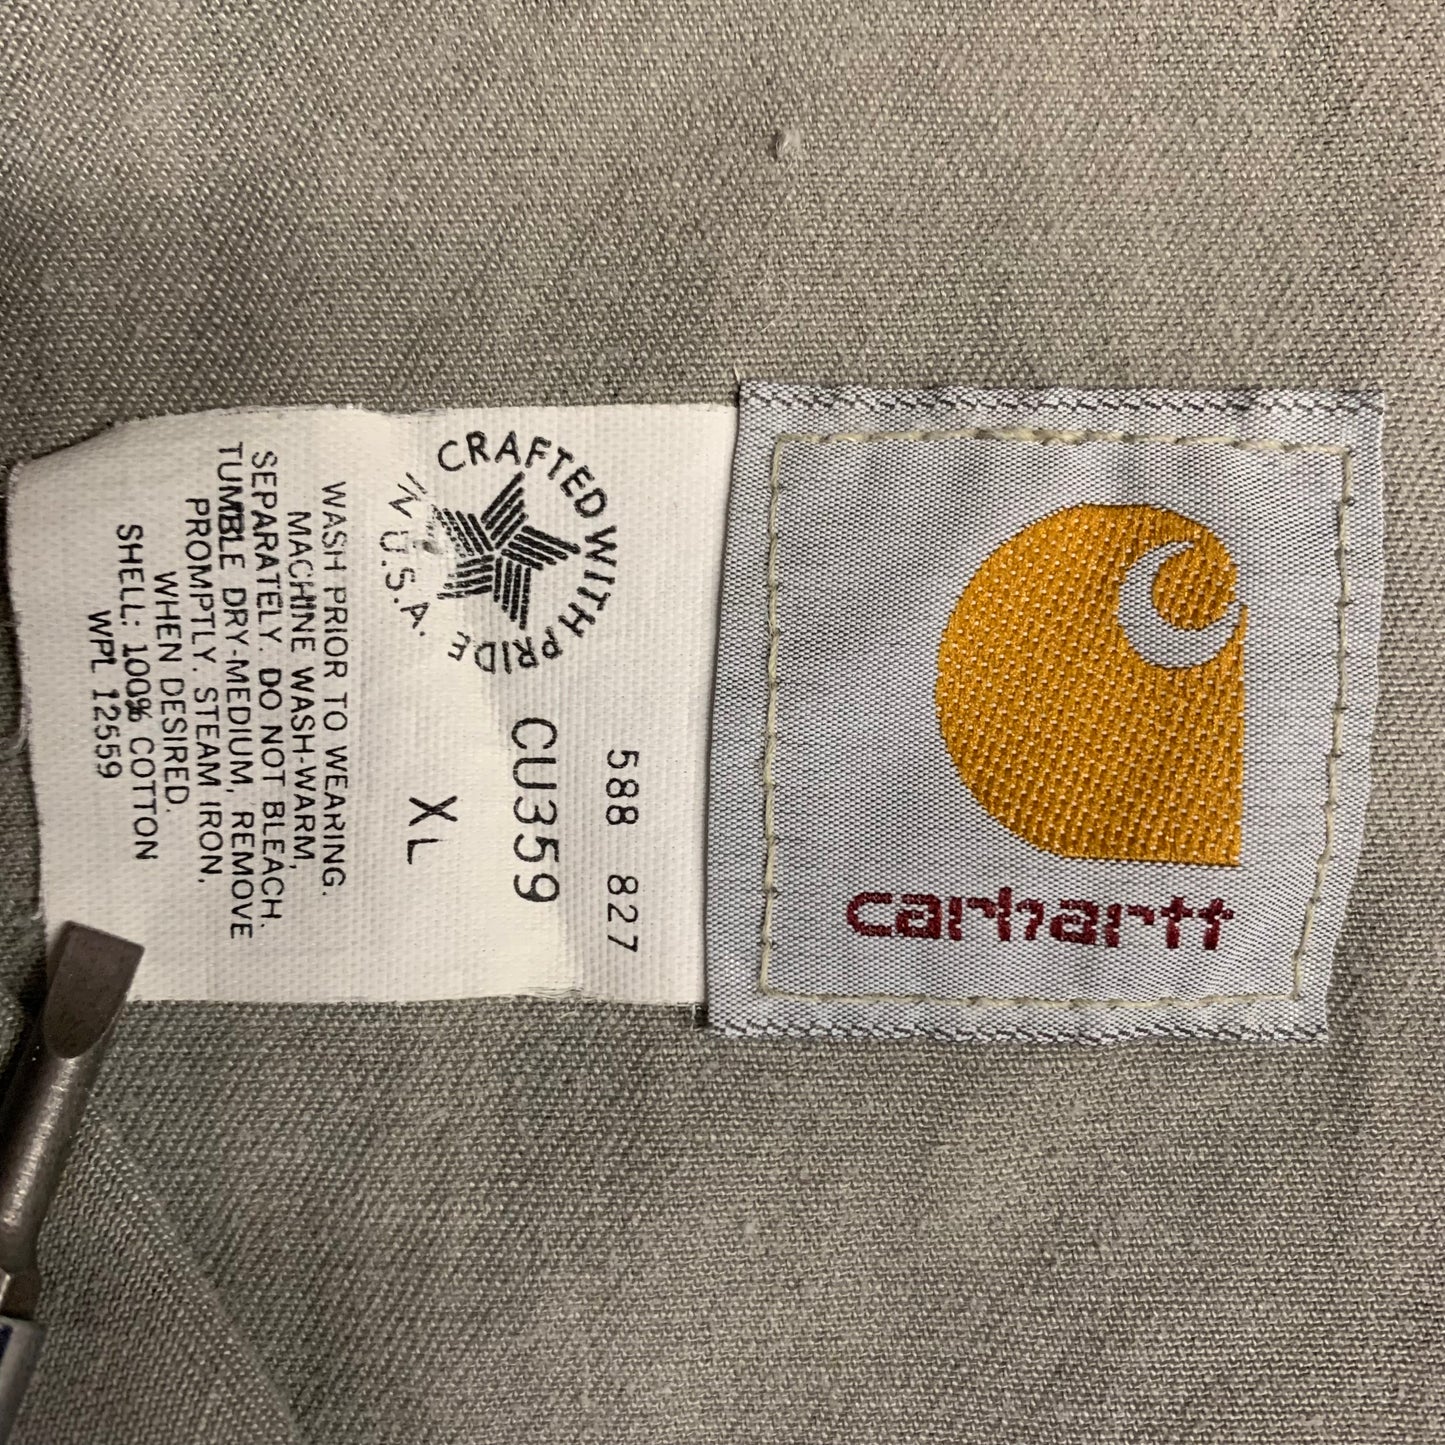 Carhartt Camo Jacket XL